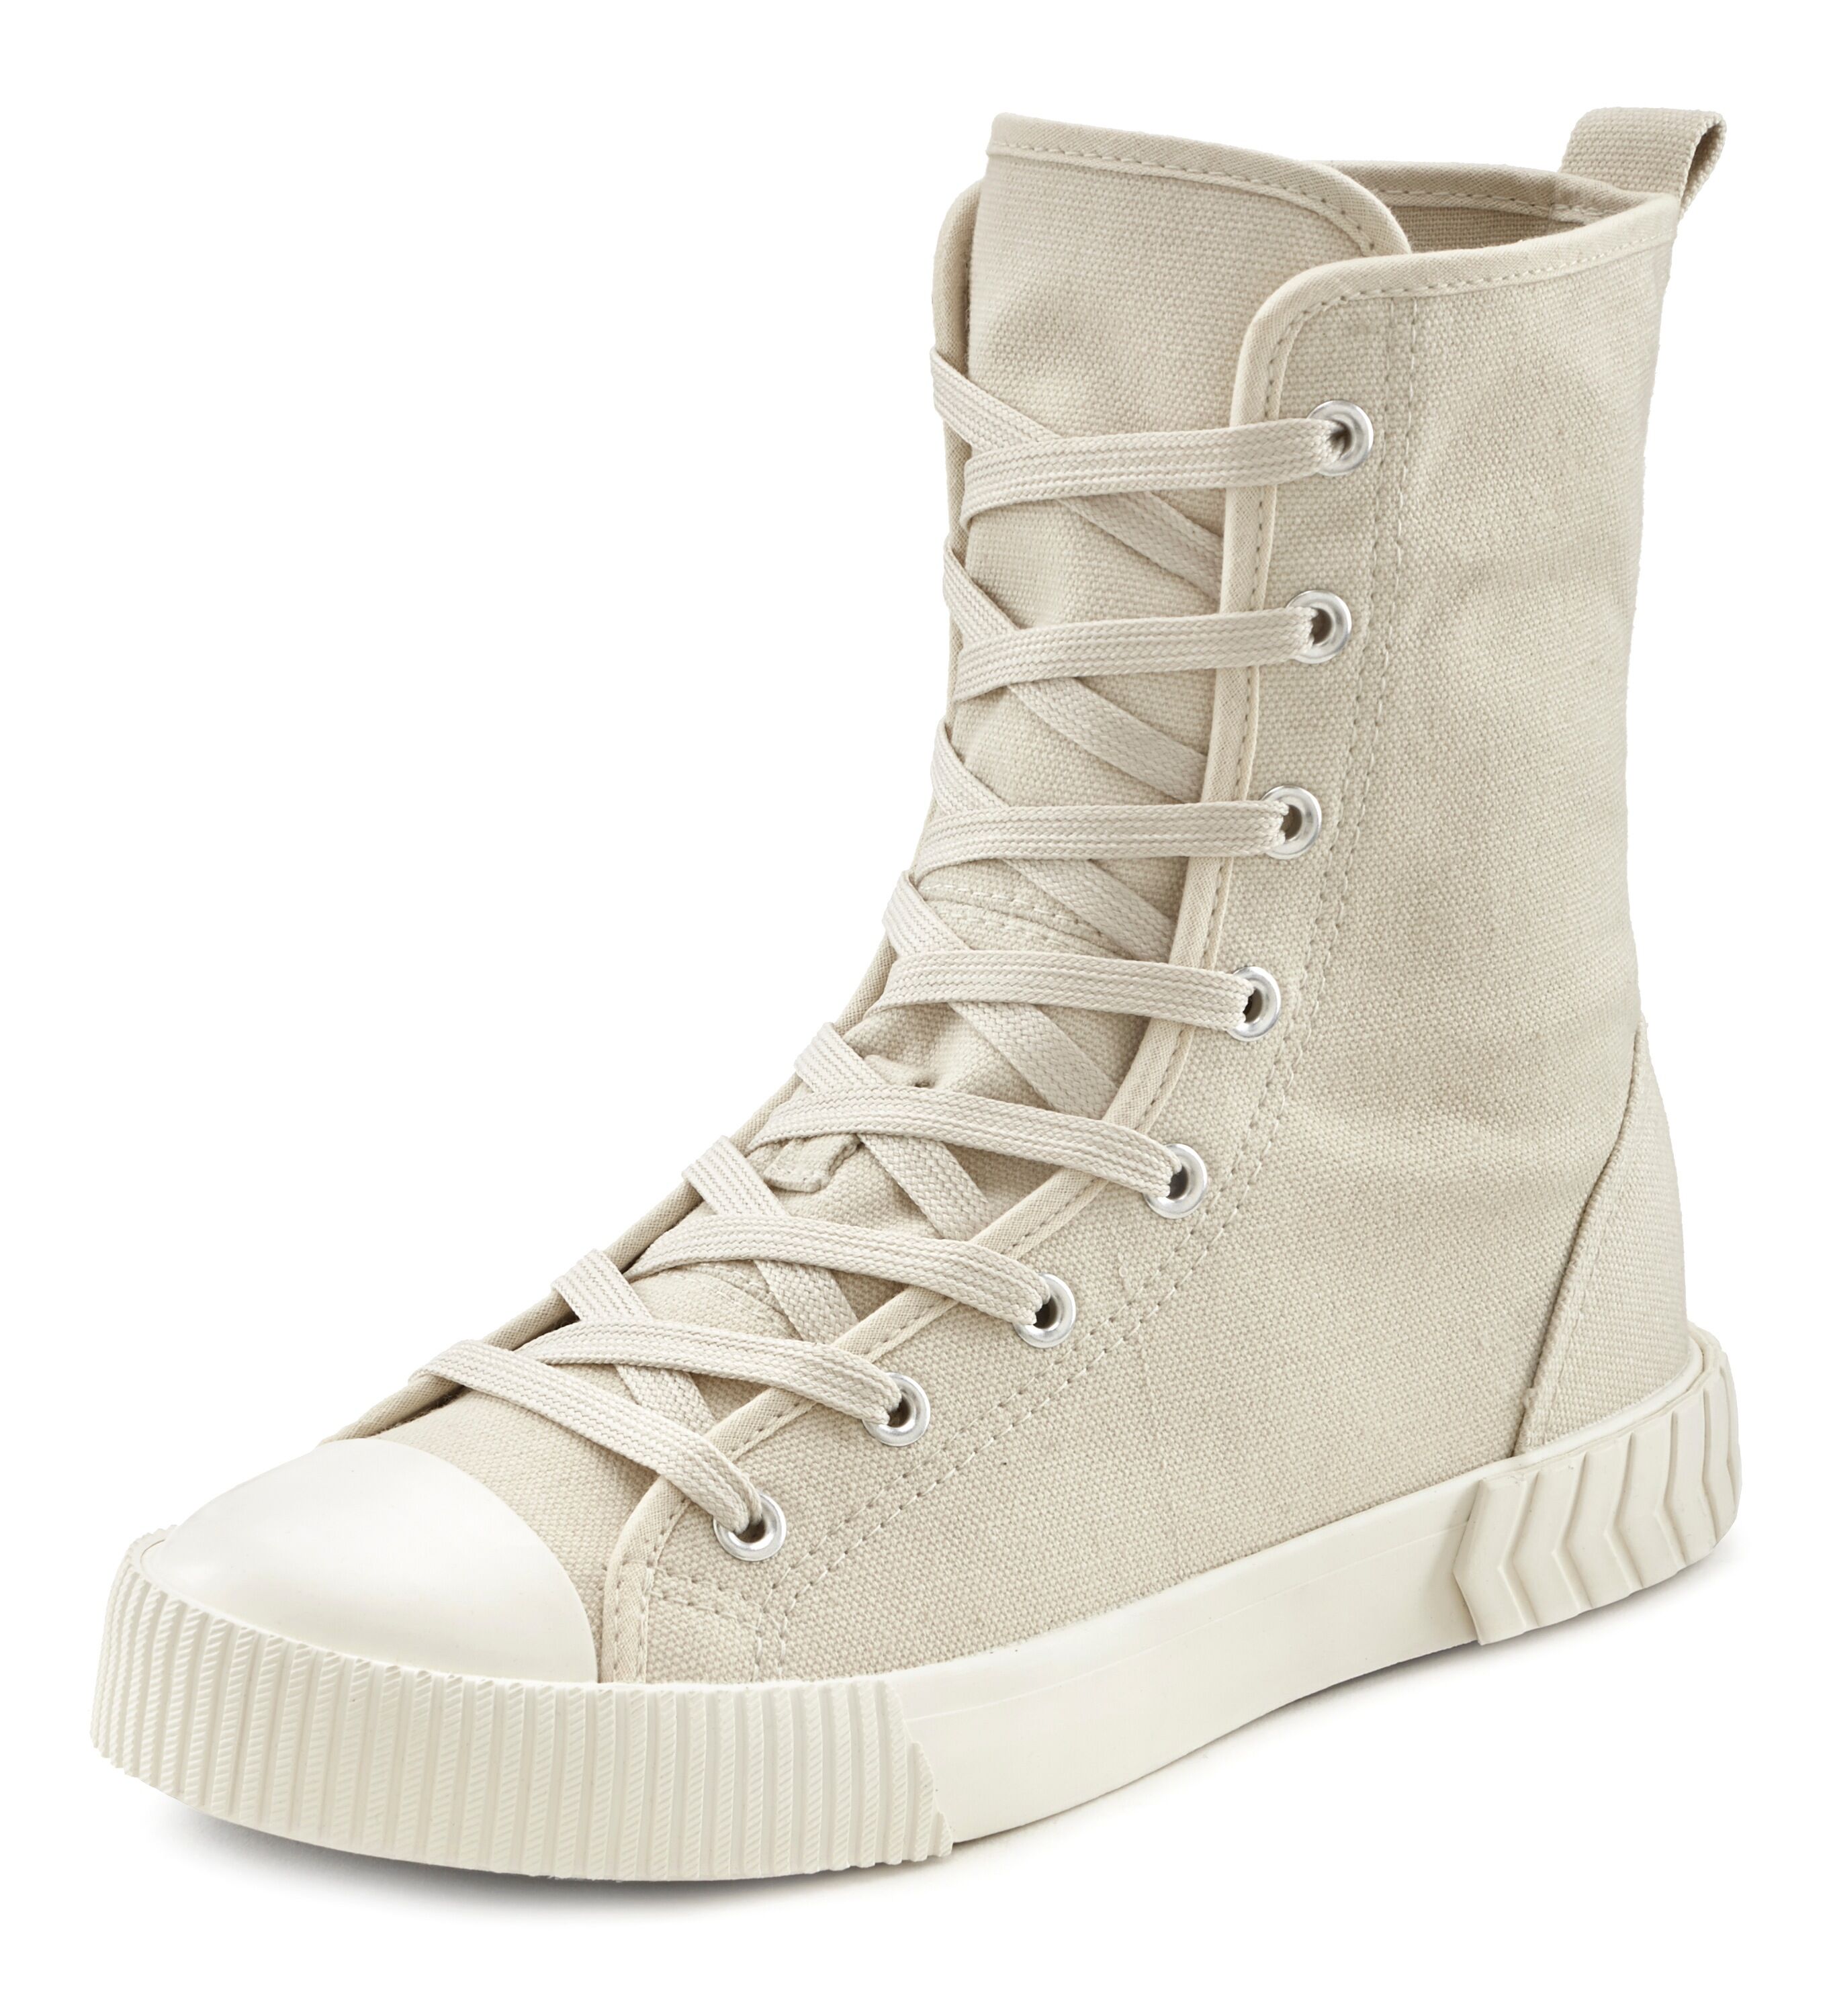 LASCANA Stiefelette, High Top Sneaker aus Textil im trendigen Combat Look beige  36 37 38 39 40 41 42 43